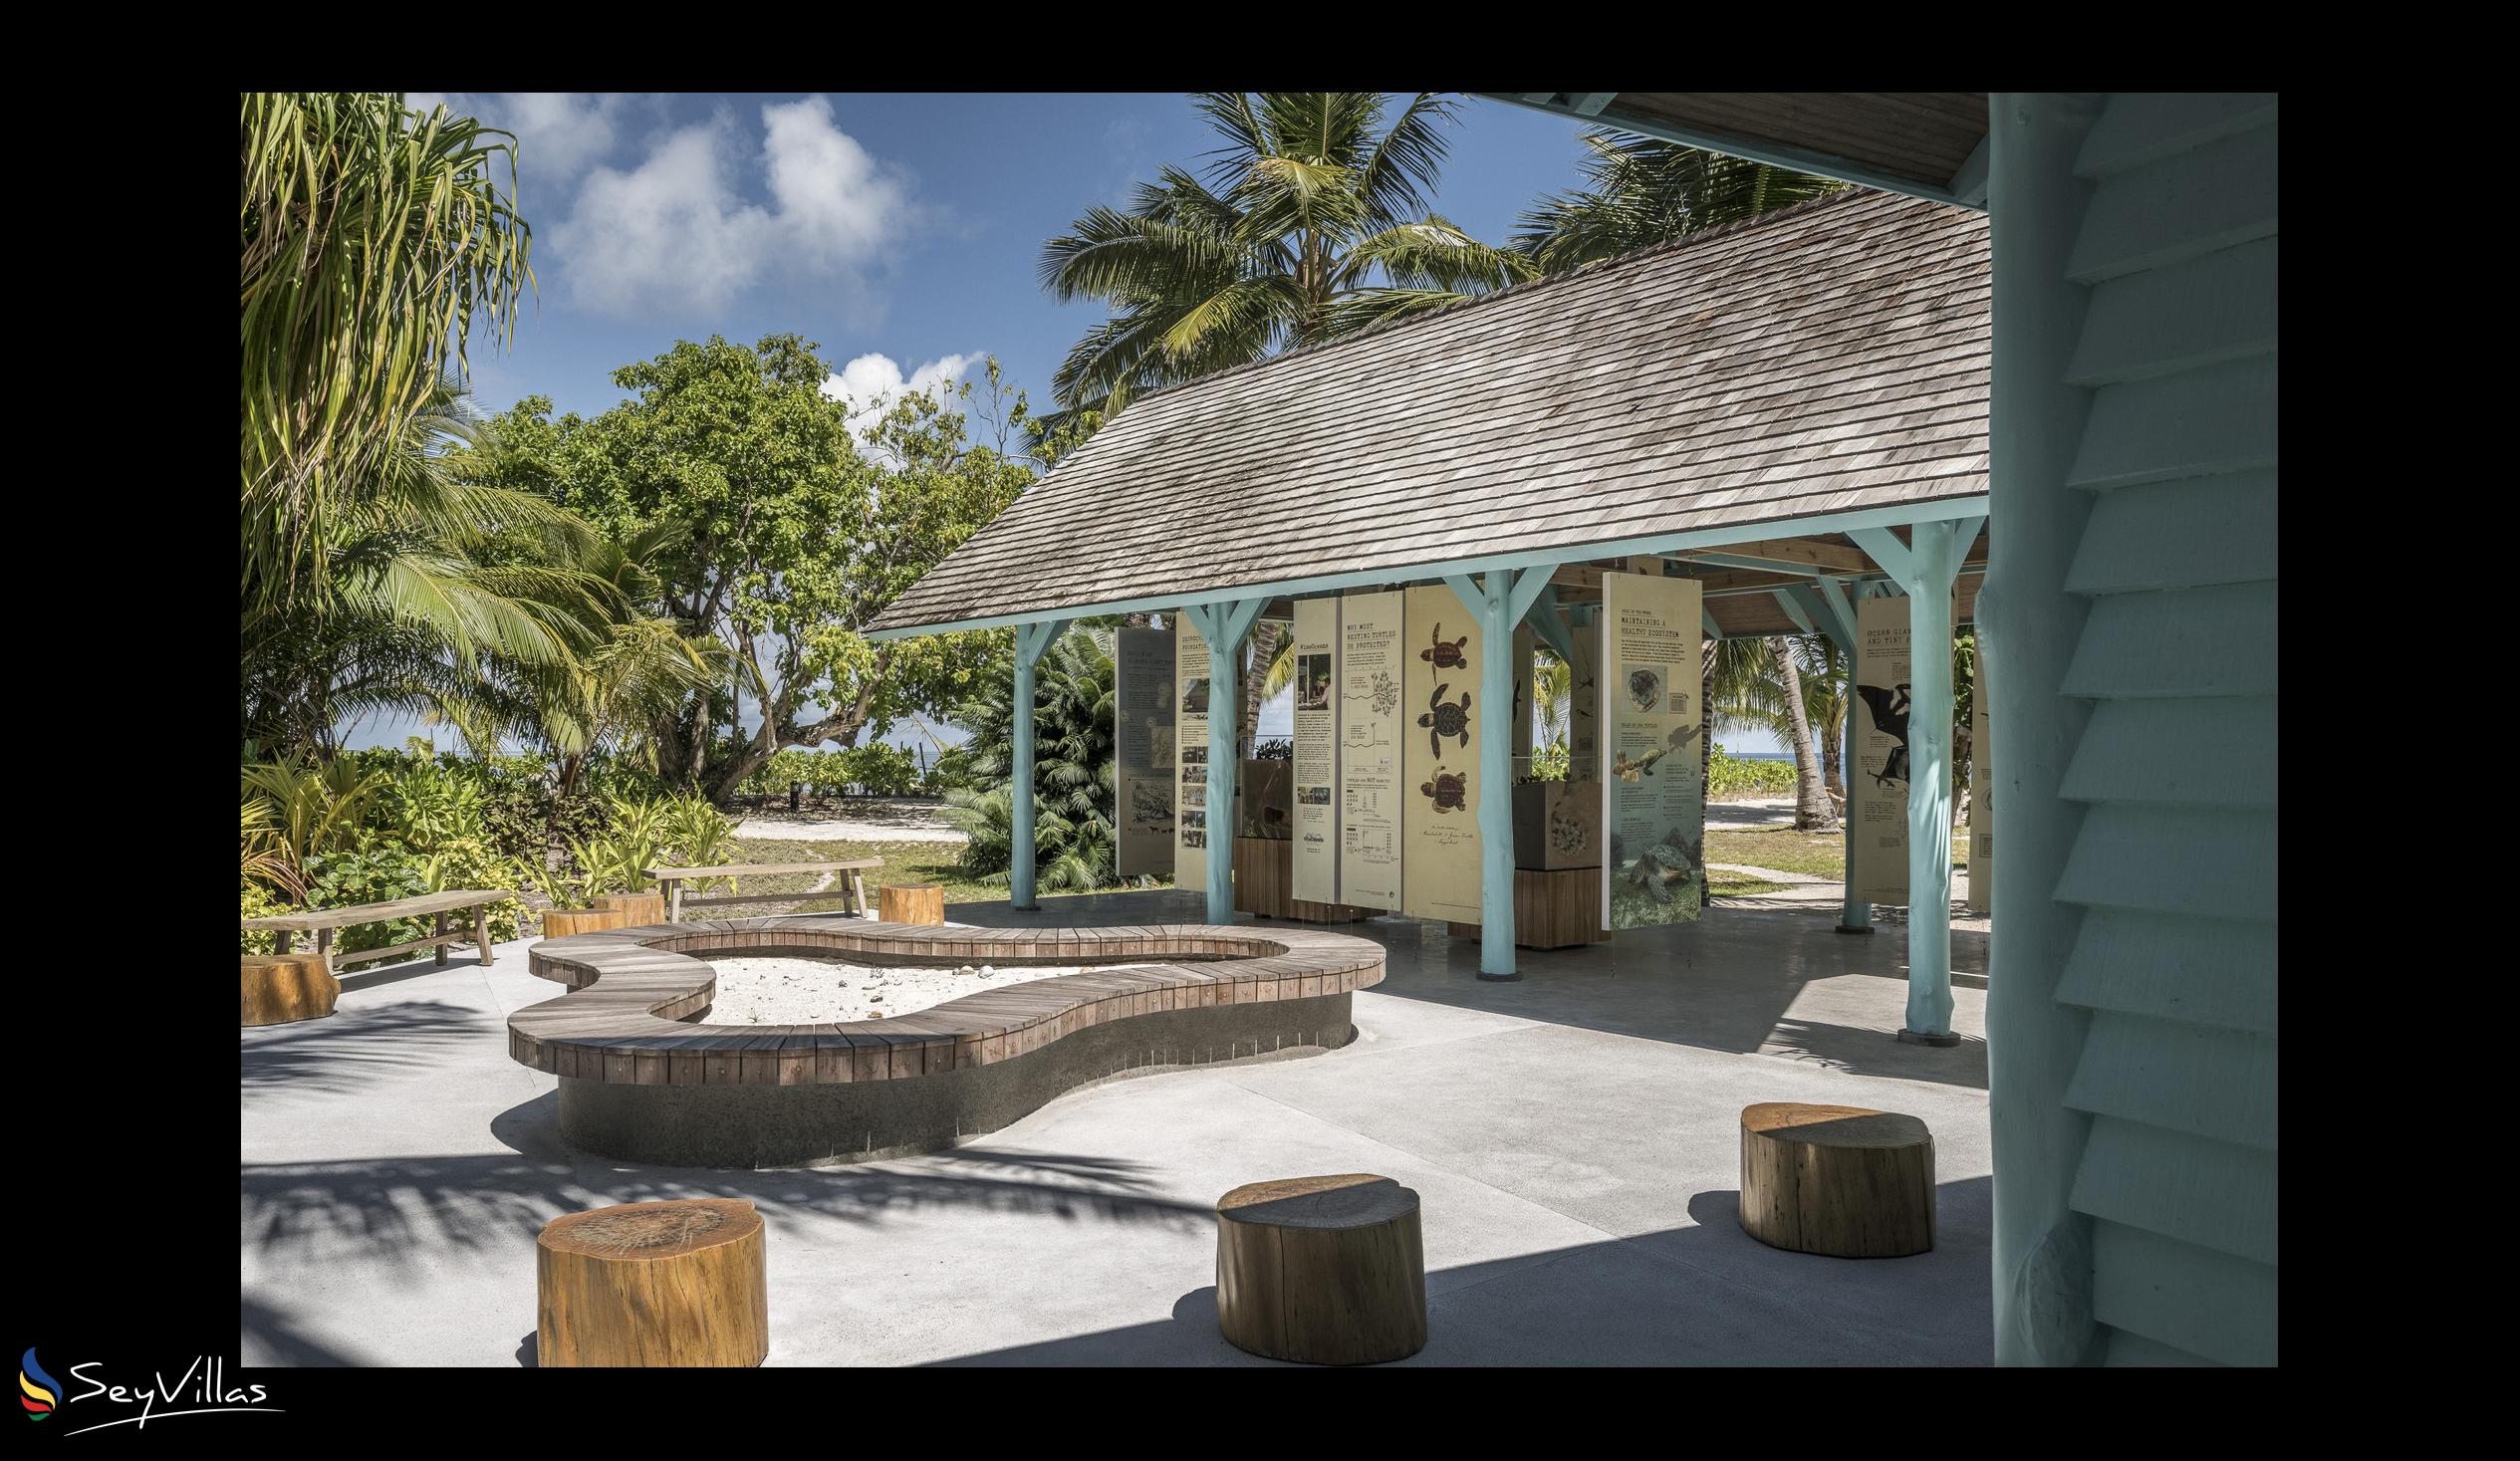 Photo 41: Four Seasons Resort Desroches Island - Indoor area - Desroches Island (Seychelles)